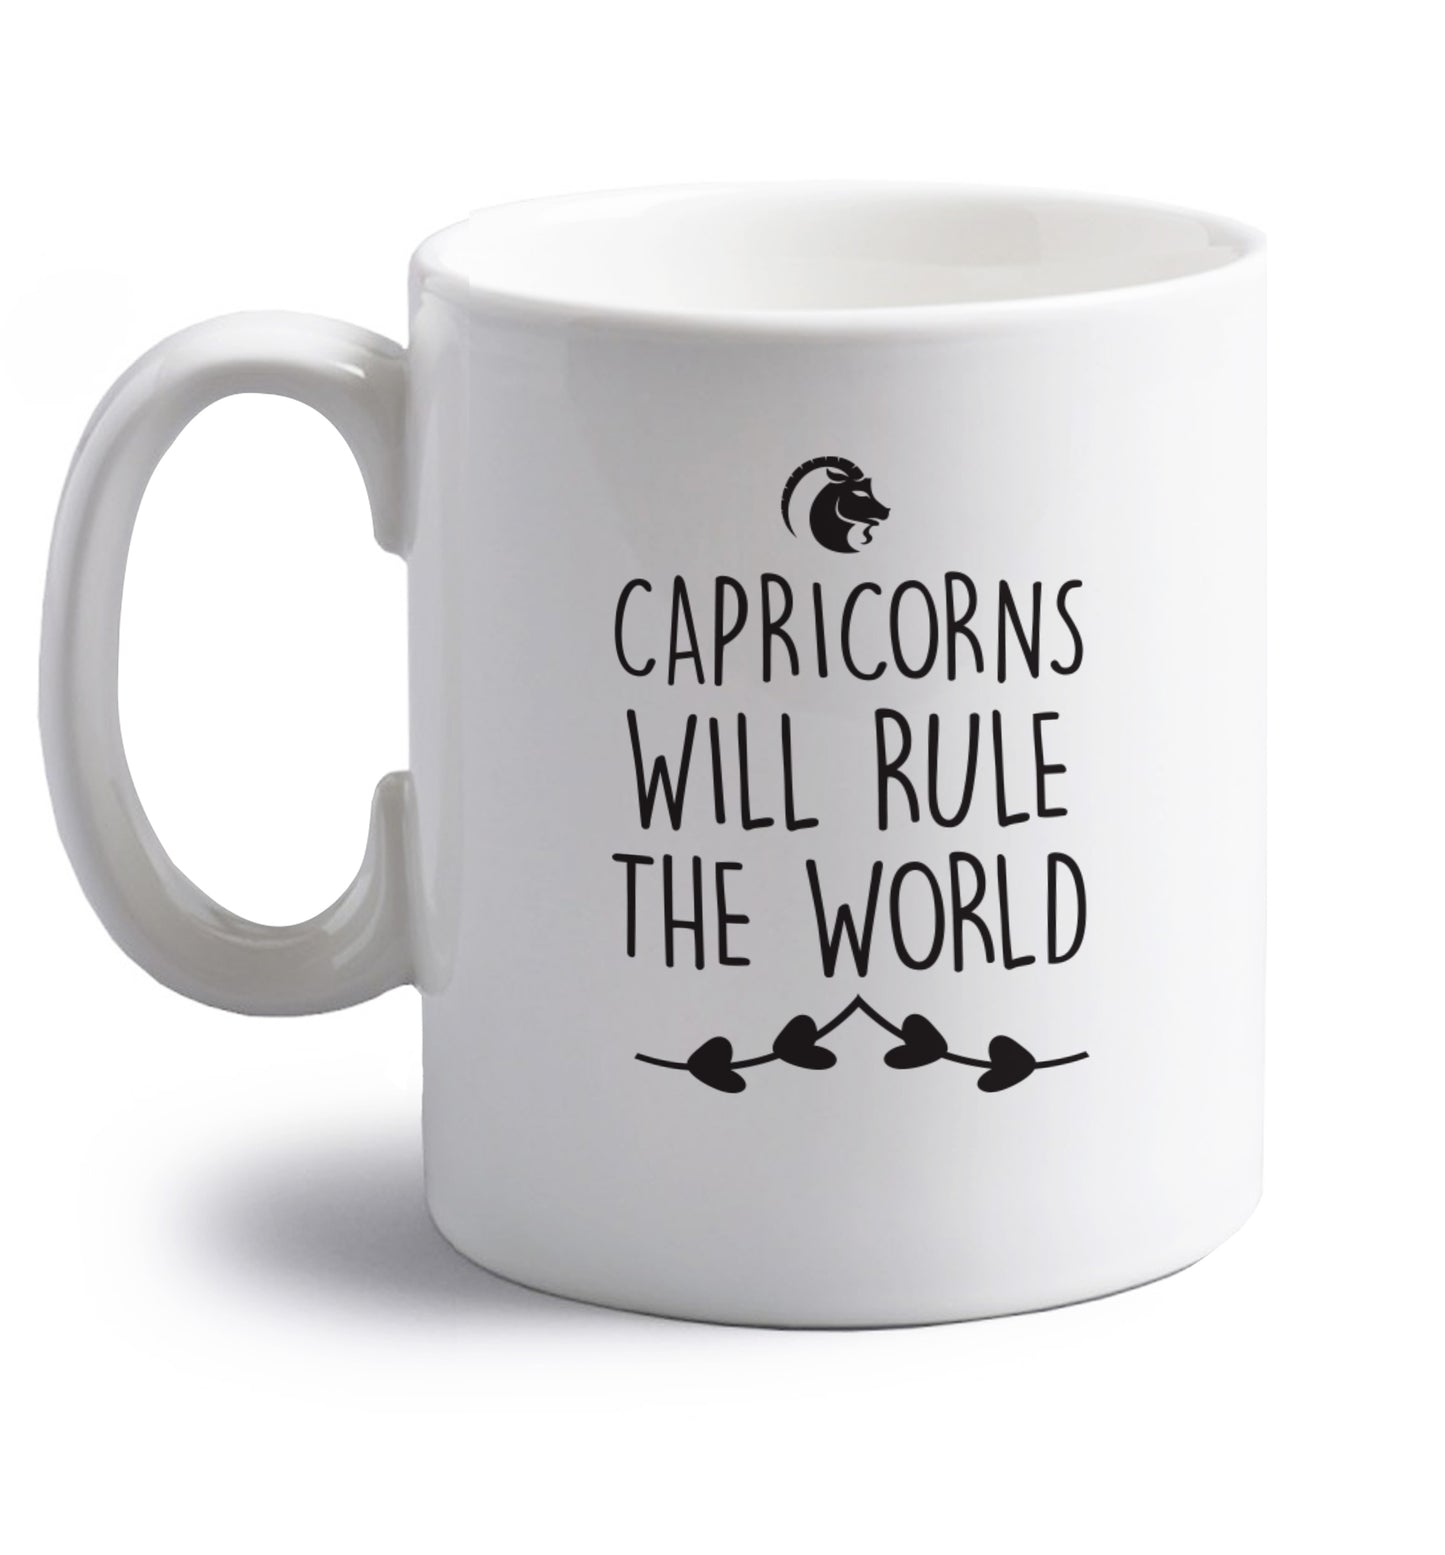 Capricorns will rule the world right handed white ceramic mug 